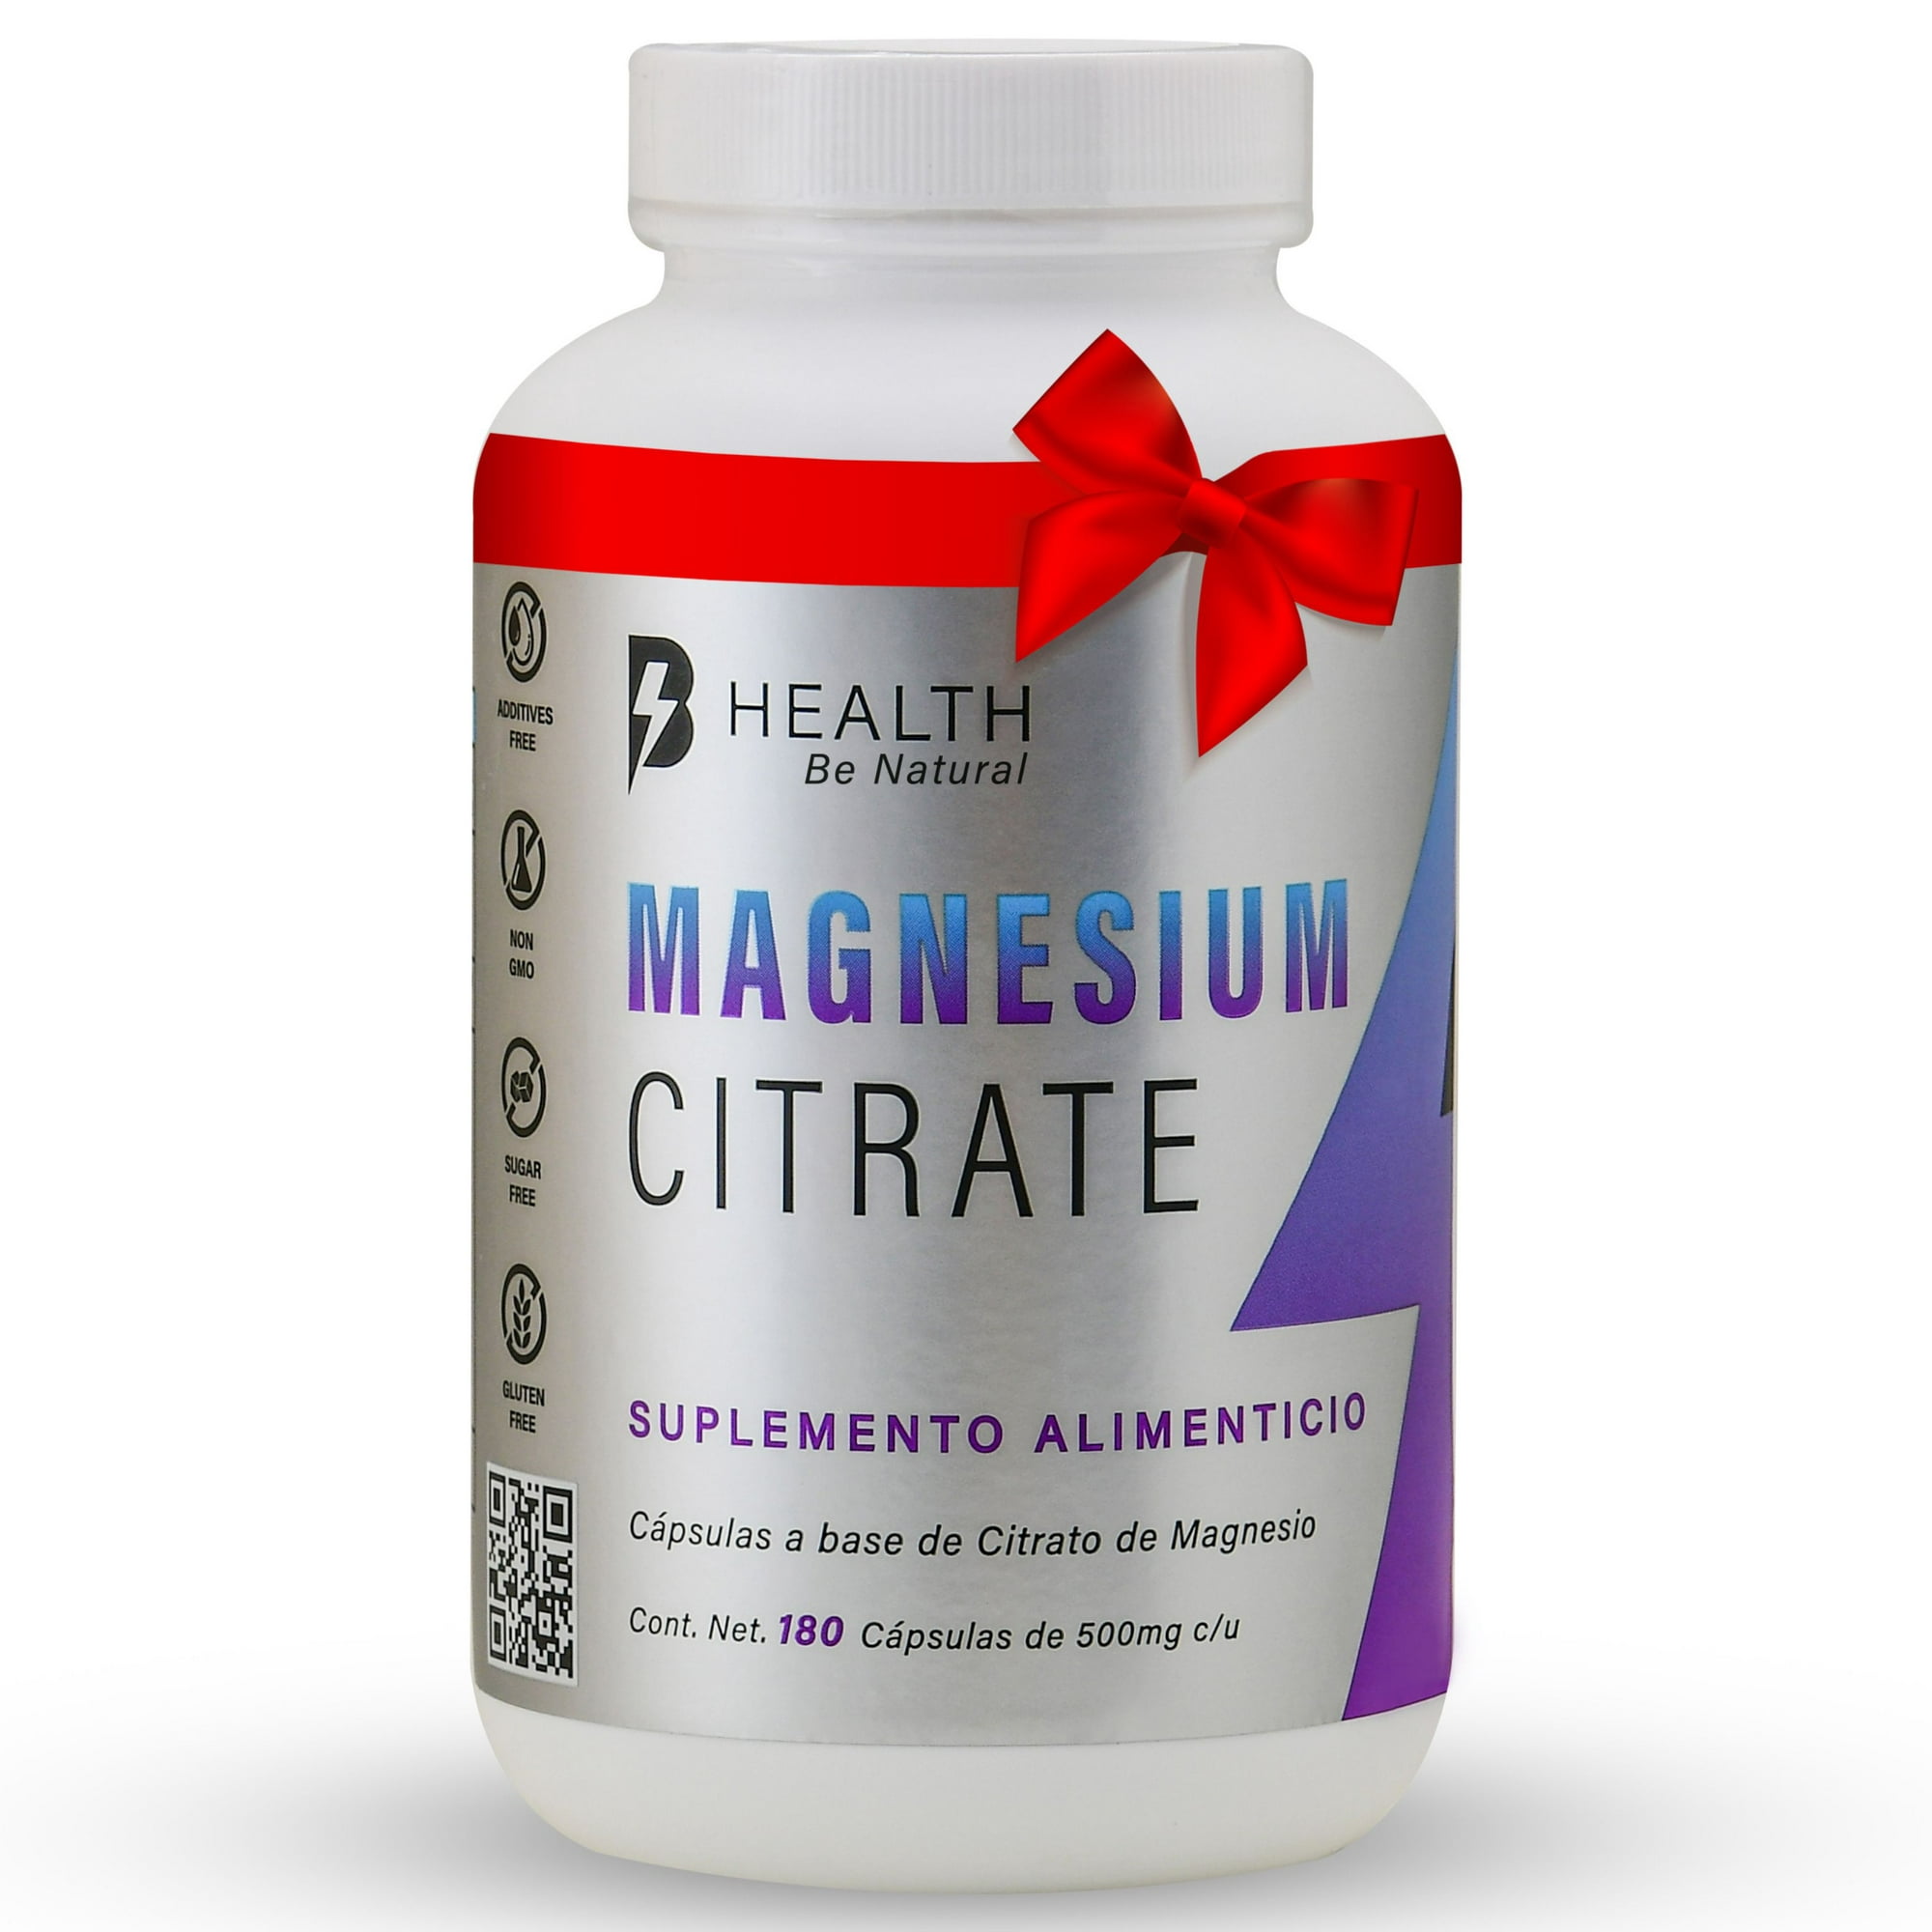 Citrato de magnesio + 100% natural + sin azúcar + keto + b health be natural citrato de magnesio 180 cápsulas de 500 mg